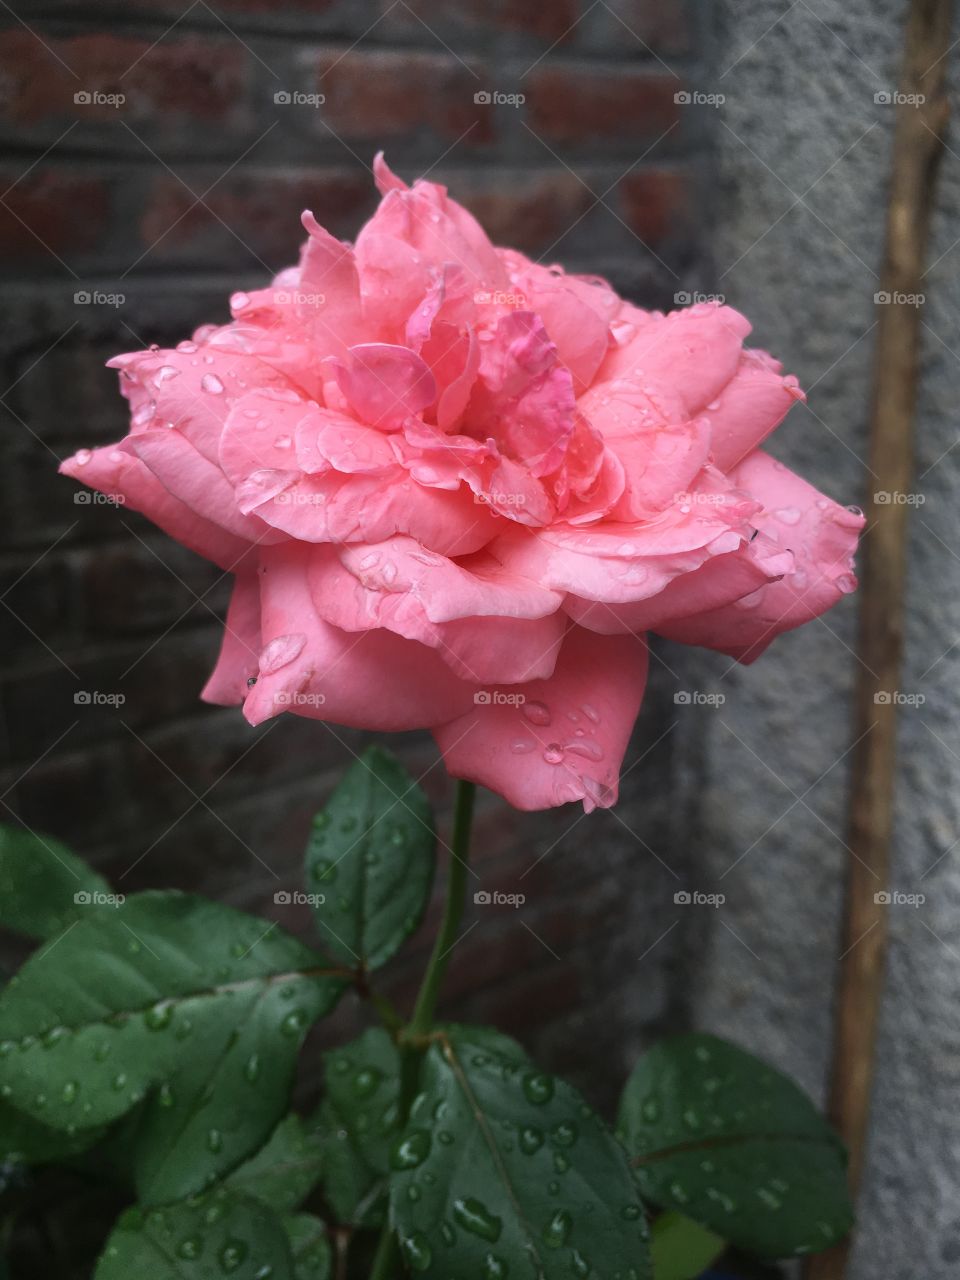 Rainy rose 